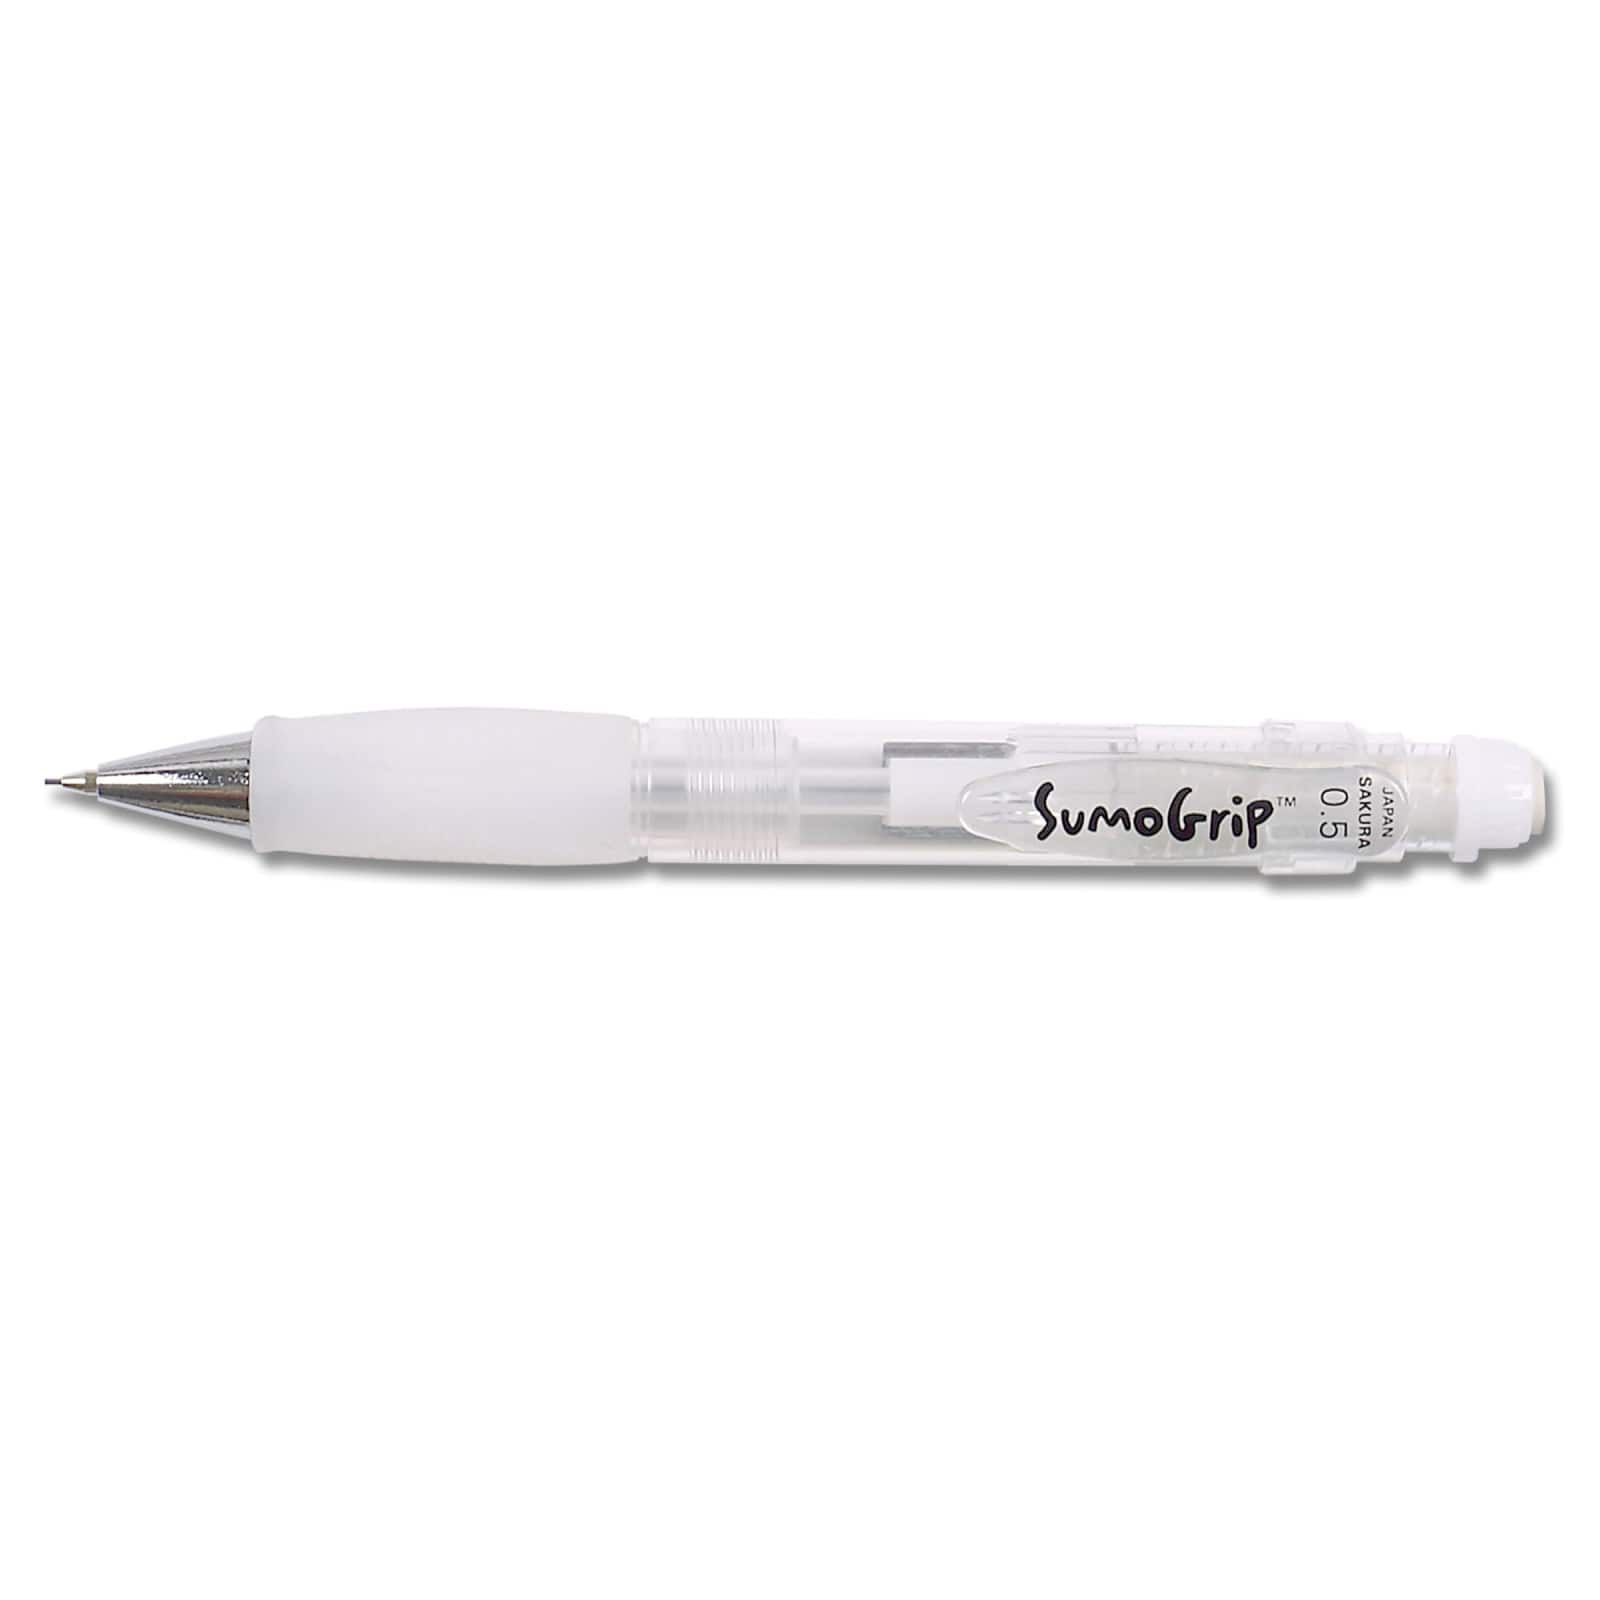 Sakura Sumogrip Mechanical Pencil .05 2ea with .05 HB lead refills 